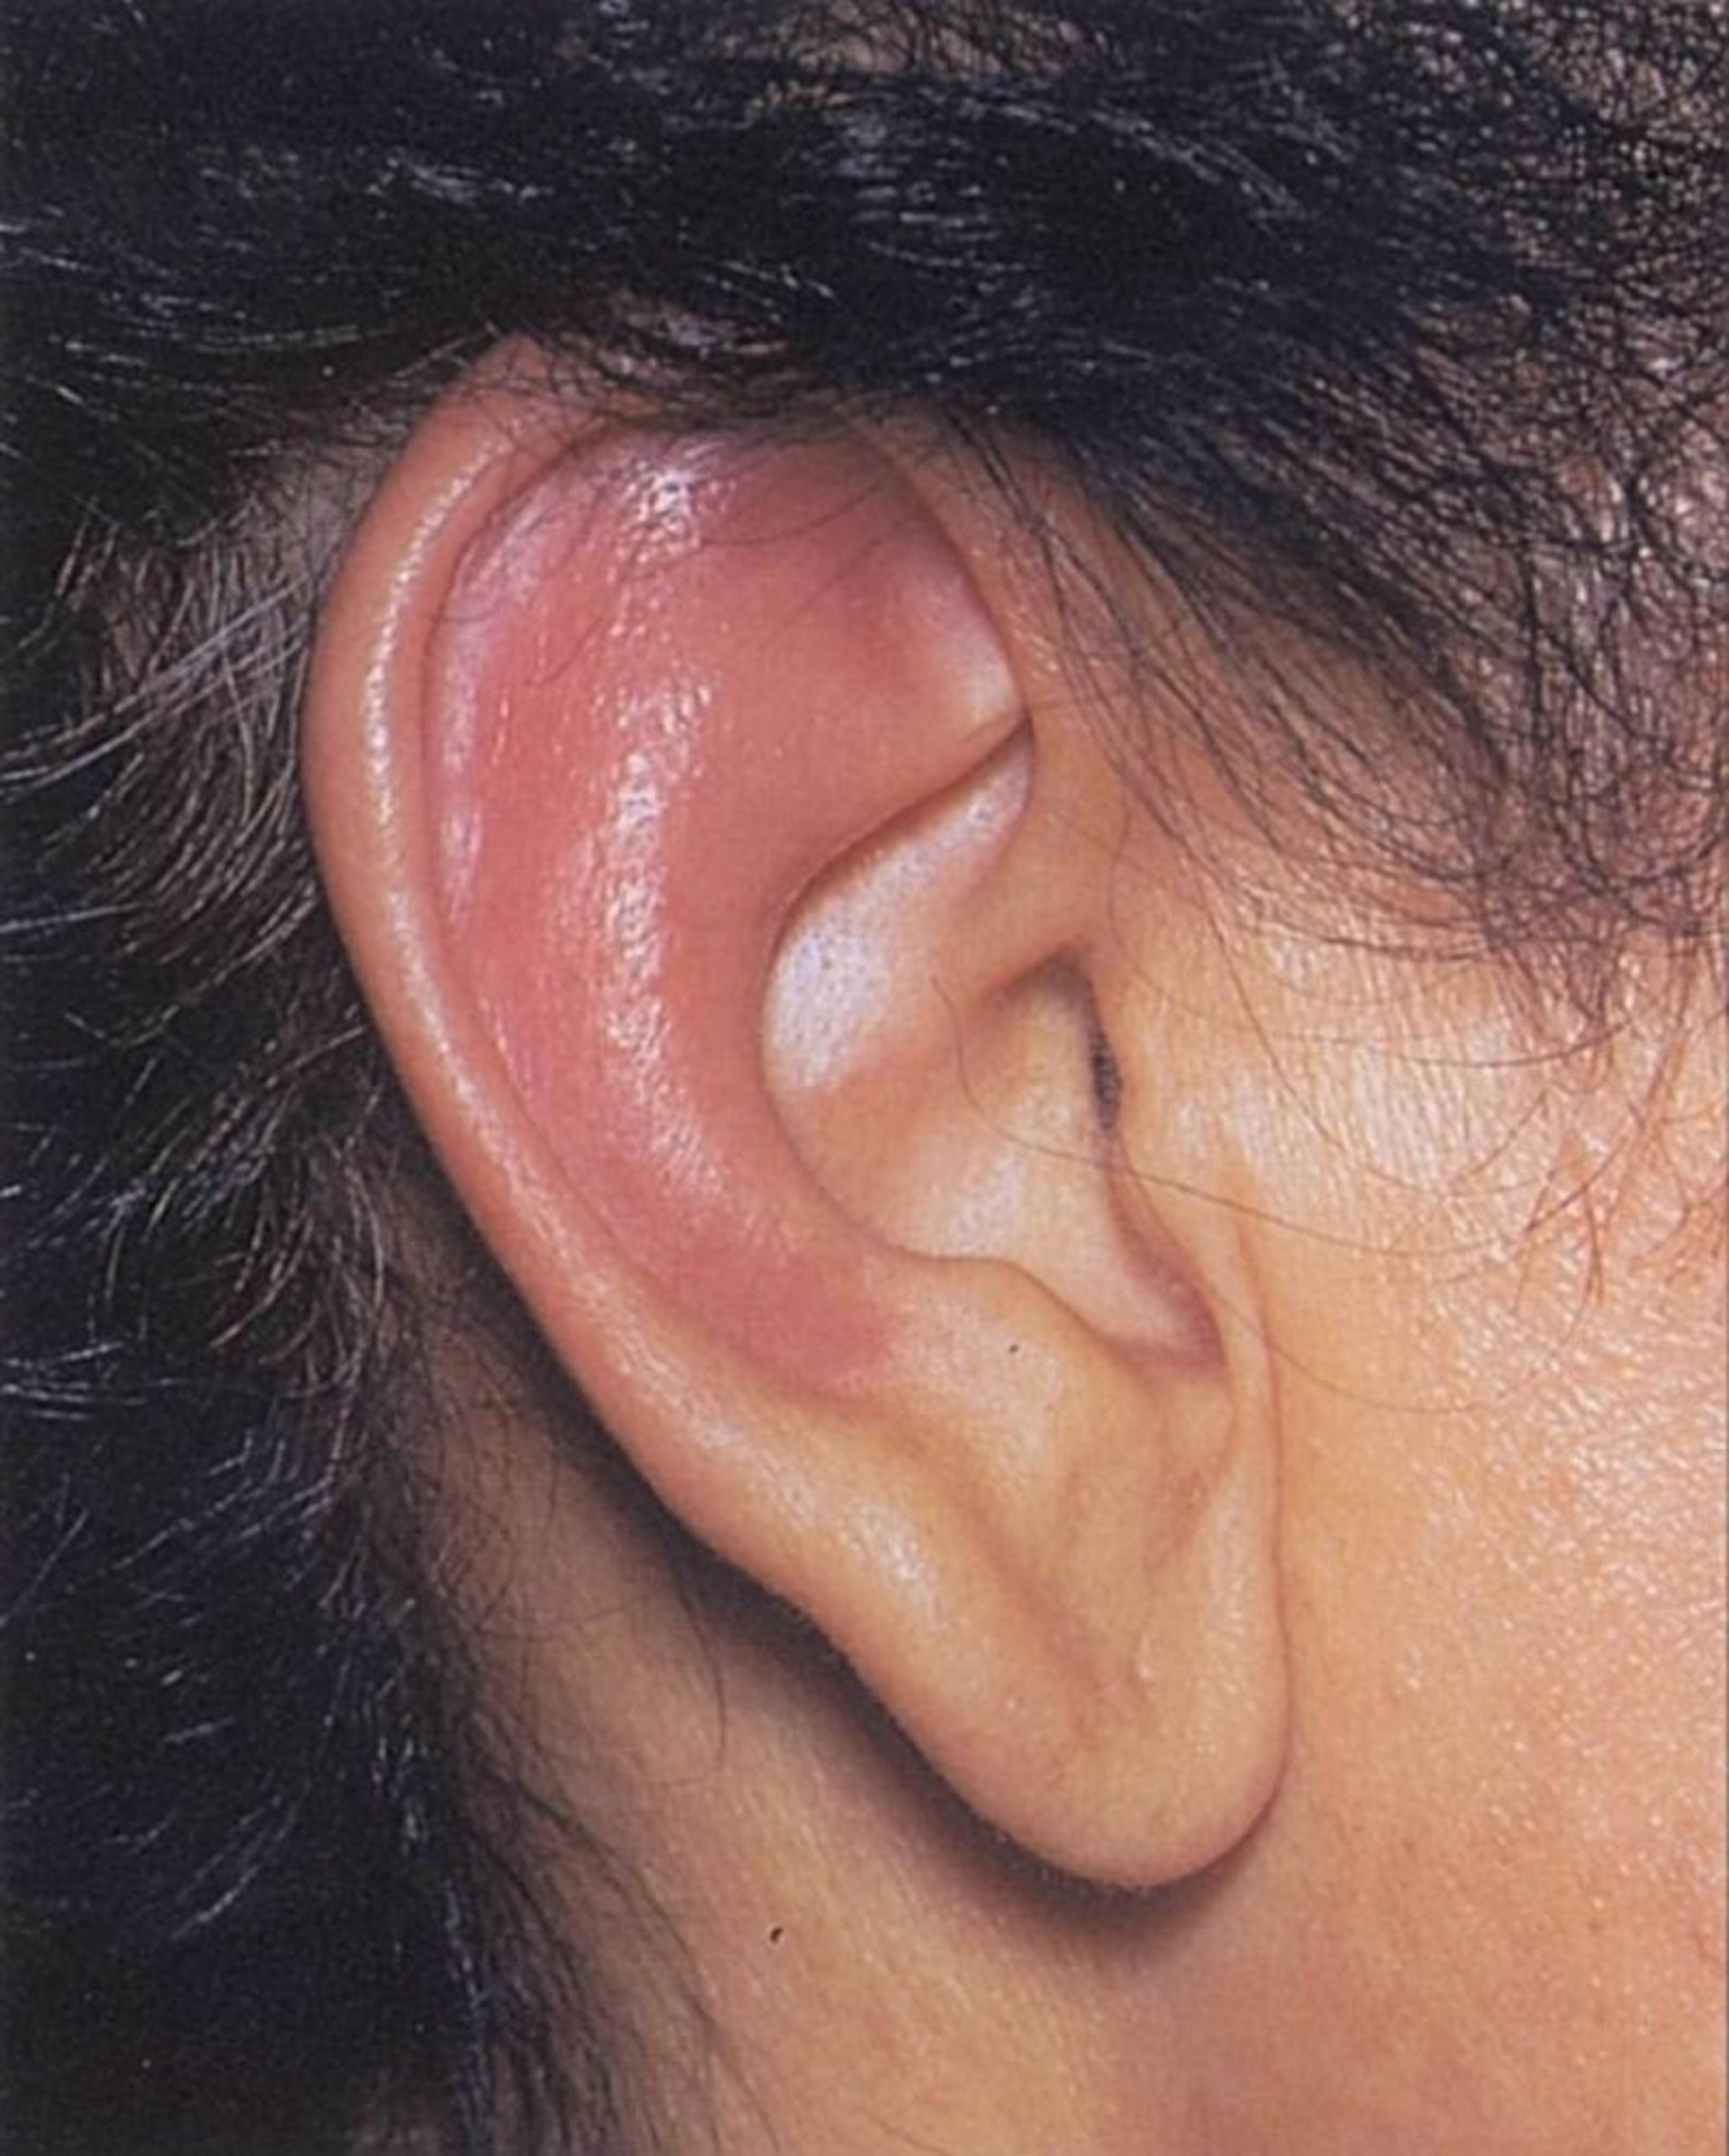 Рецидивирующий полихондрит (ухо)